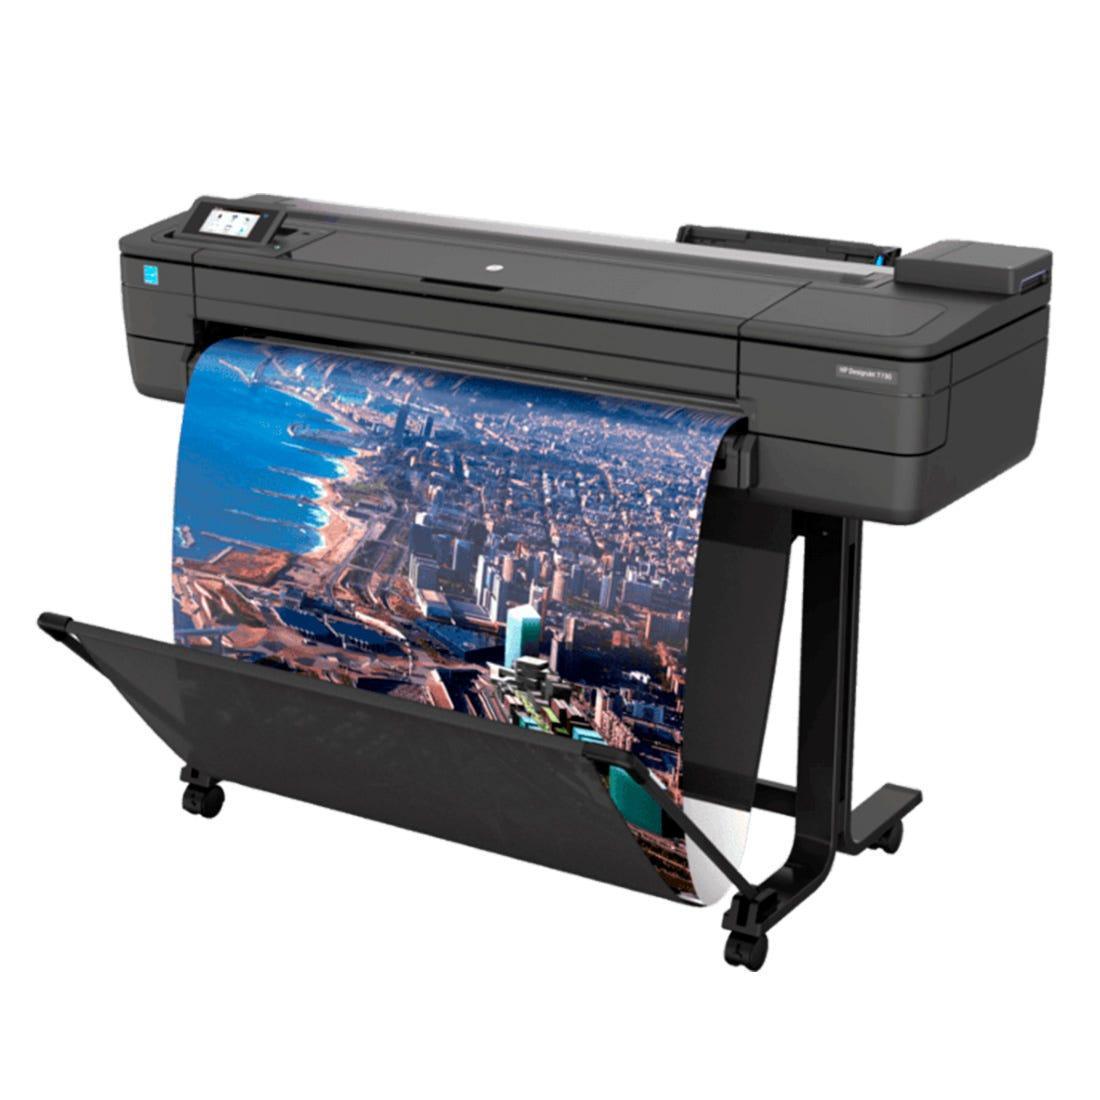 Impressora Plotter HP Designjet T730 36" - F9A29D#B1K - Mega Market